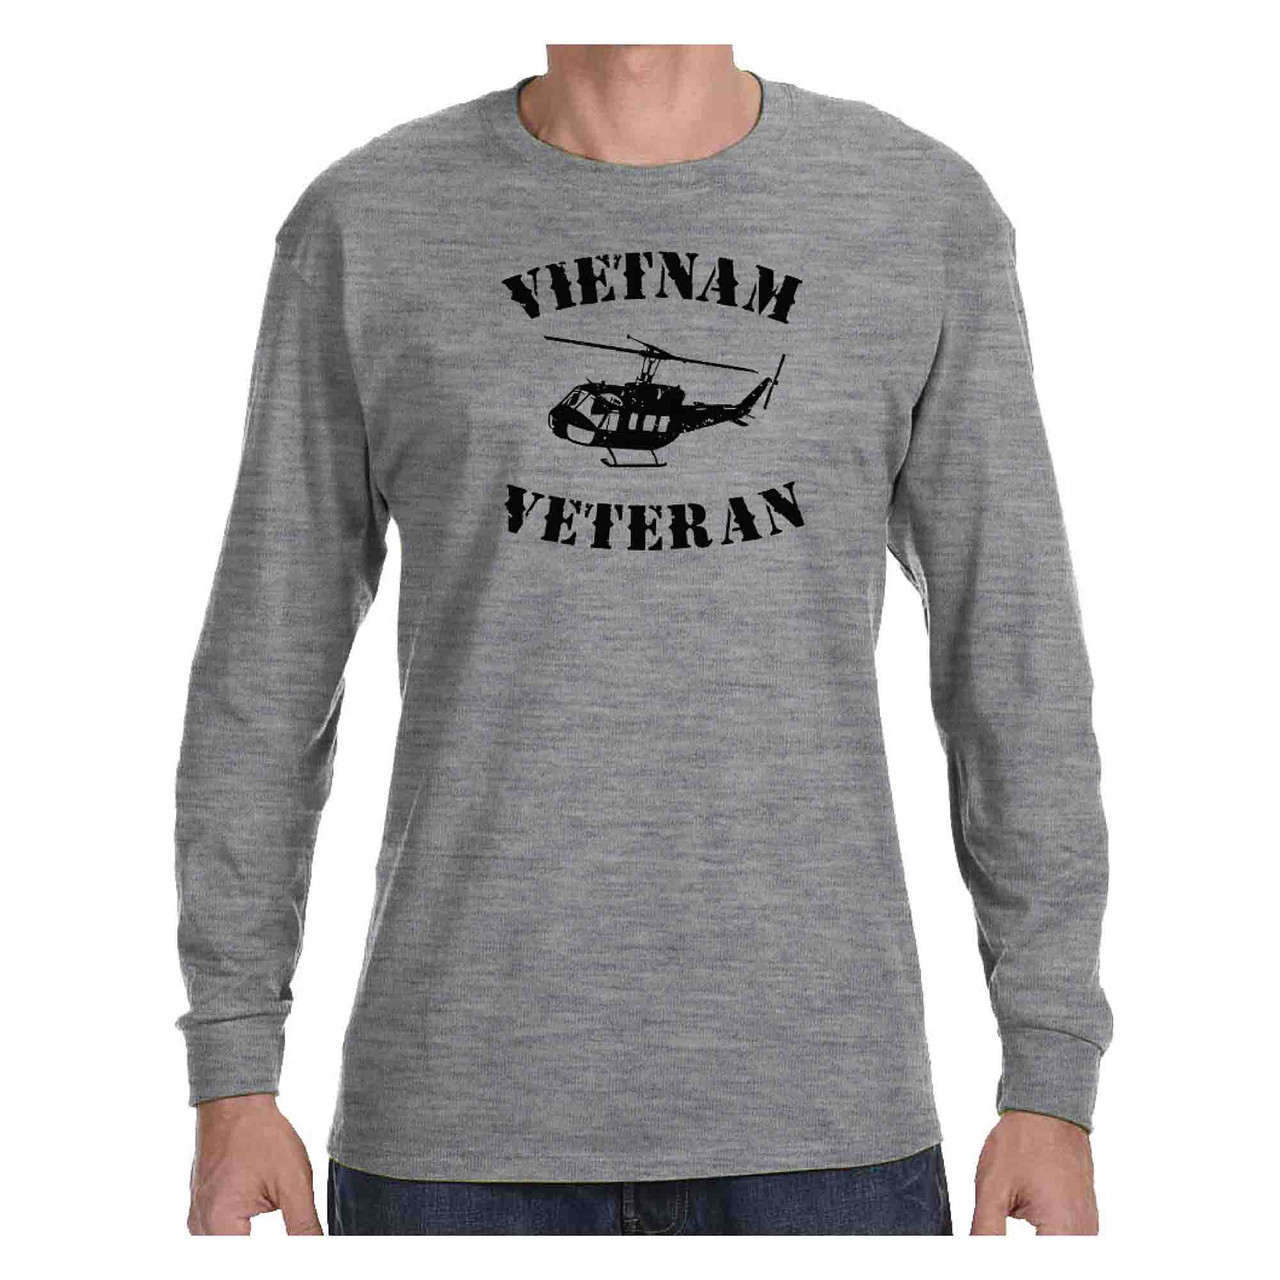 Vietnam Veteran Huey Grey Long Sleeve T-Shirt with Black Vietnam Veteran Text and Black Huey Design front view